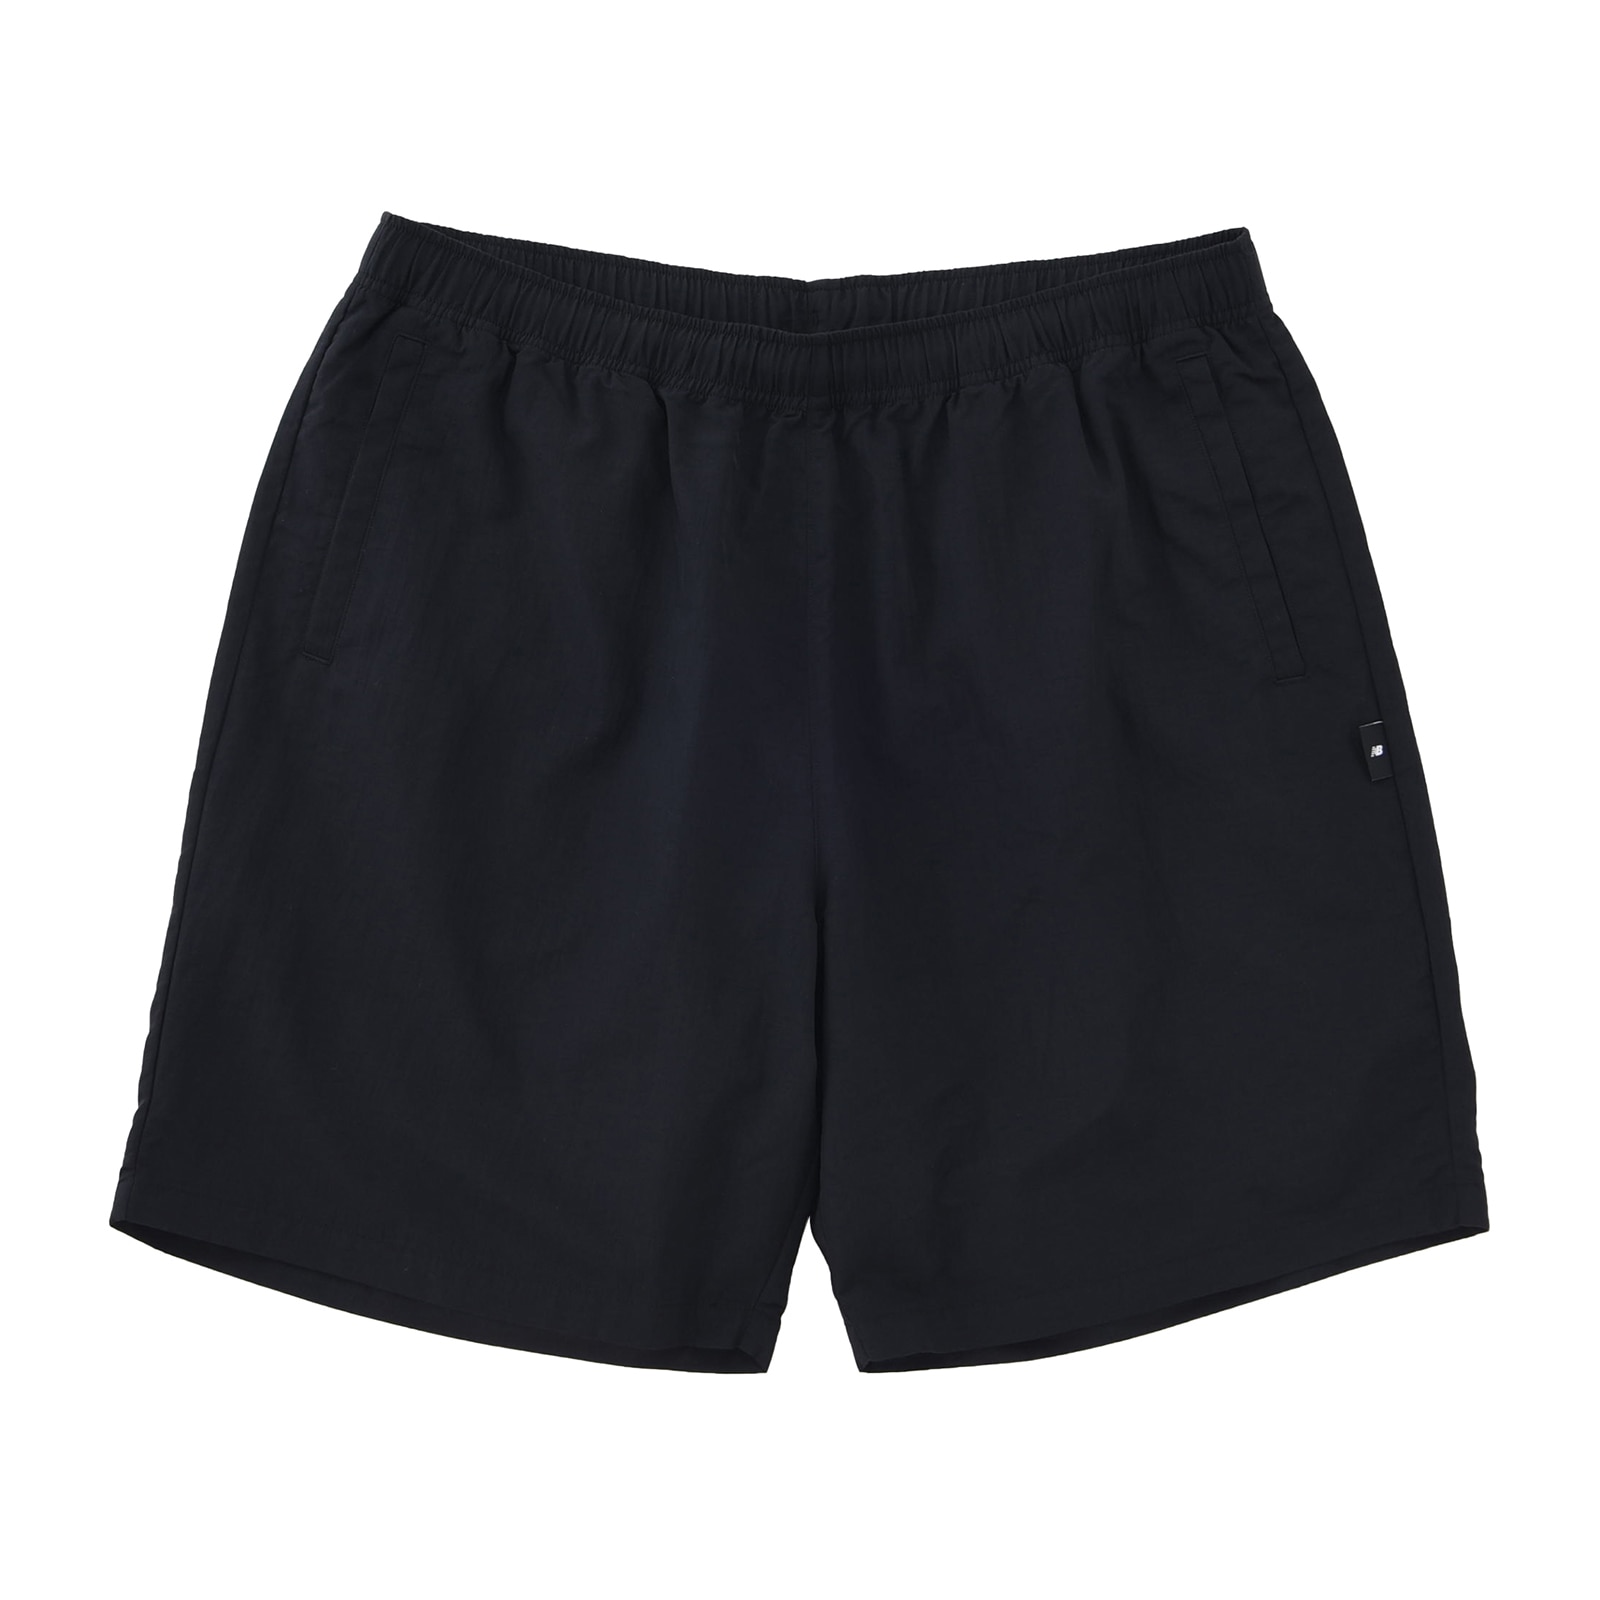 Woven 7 inch shorts